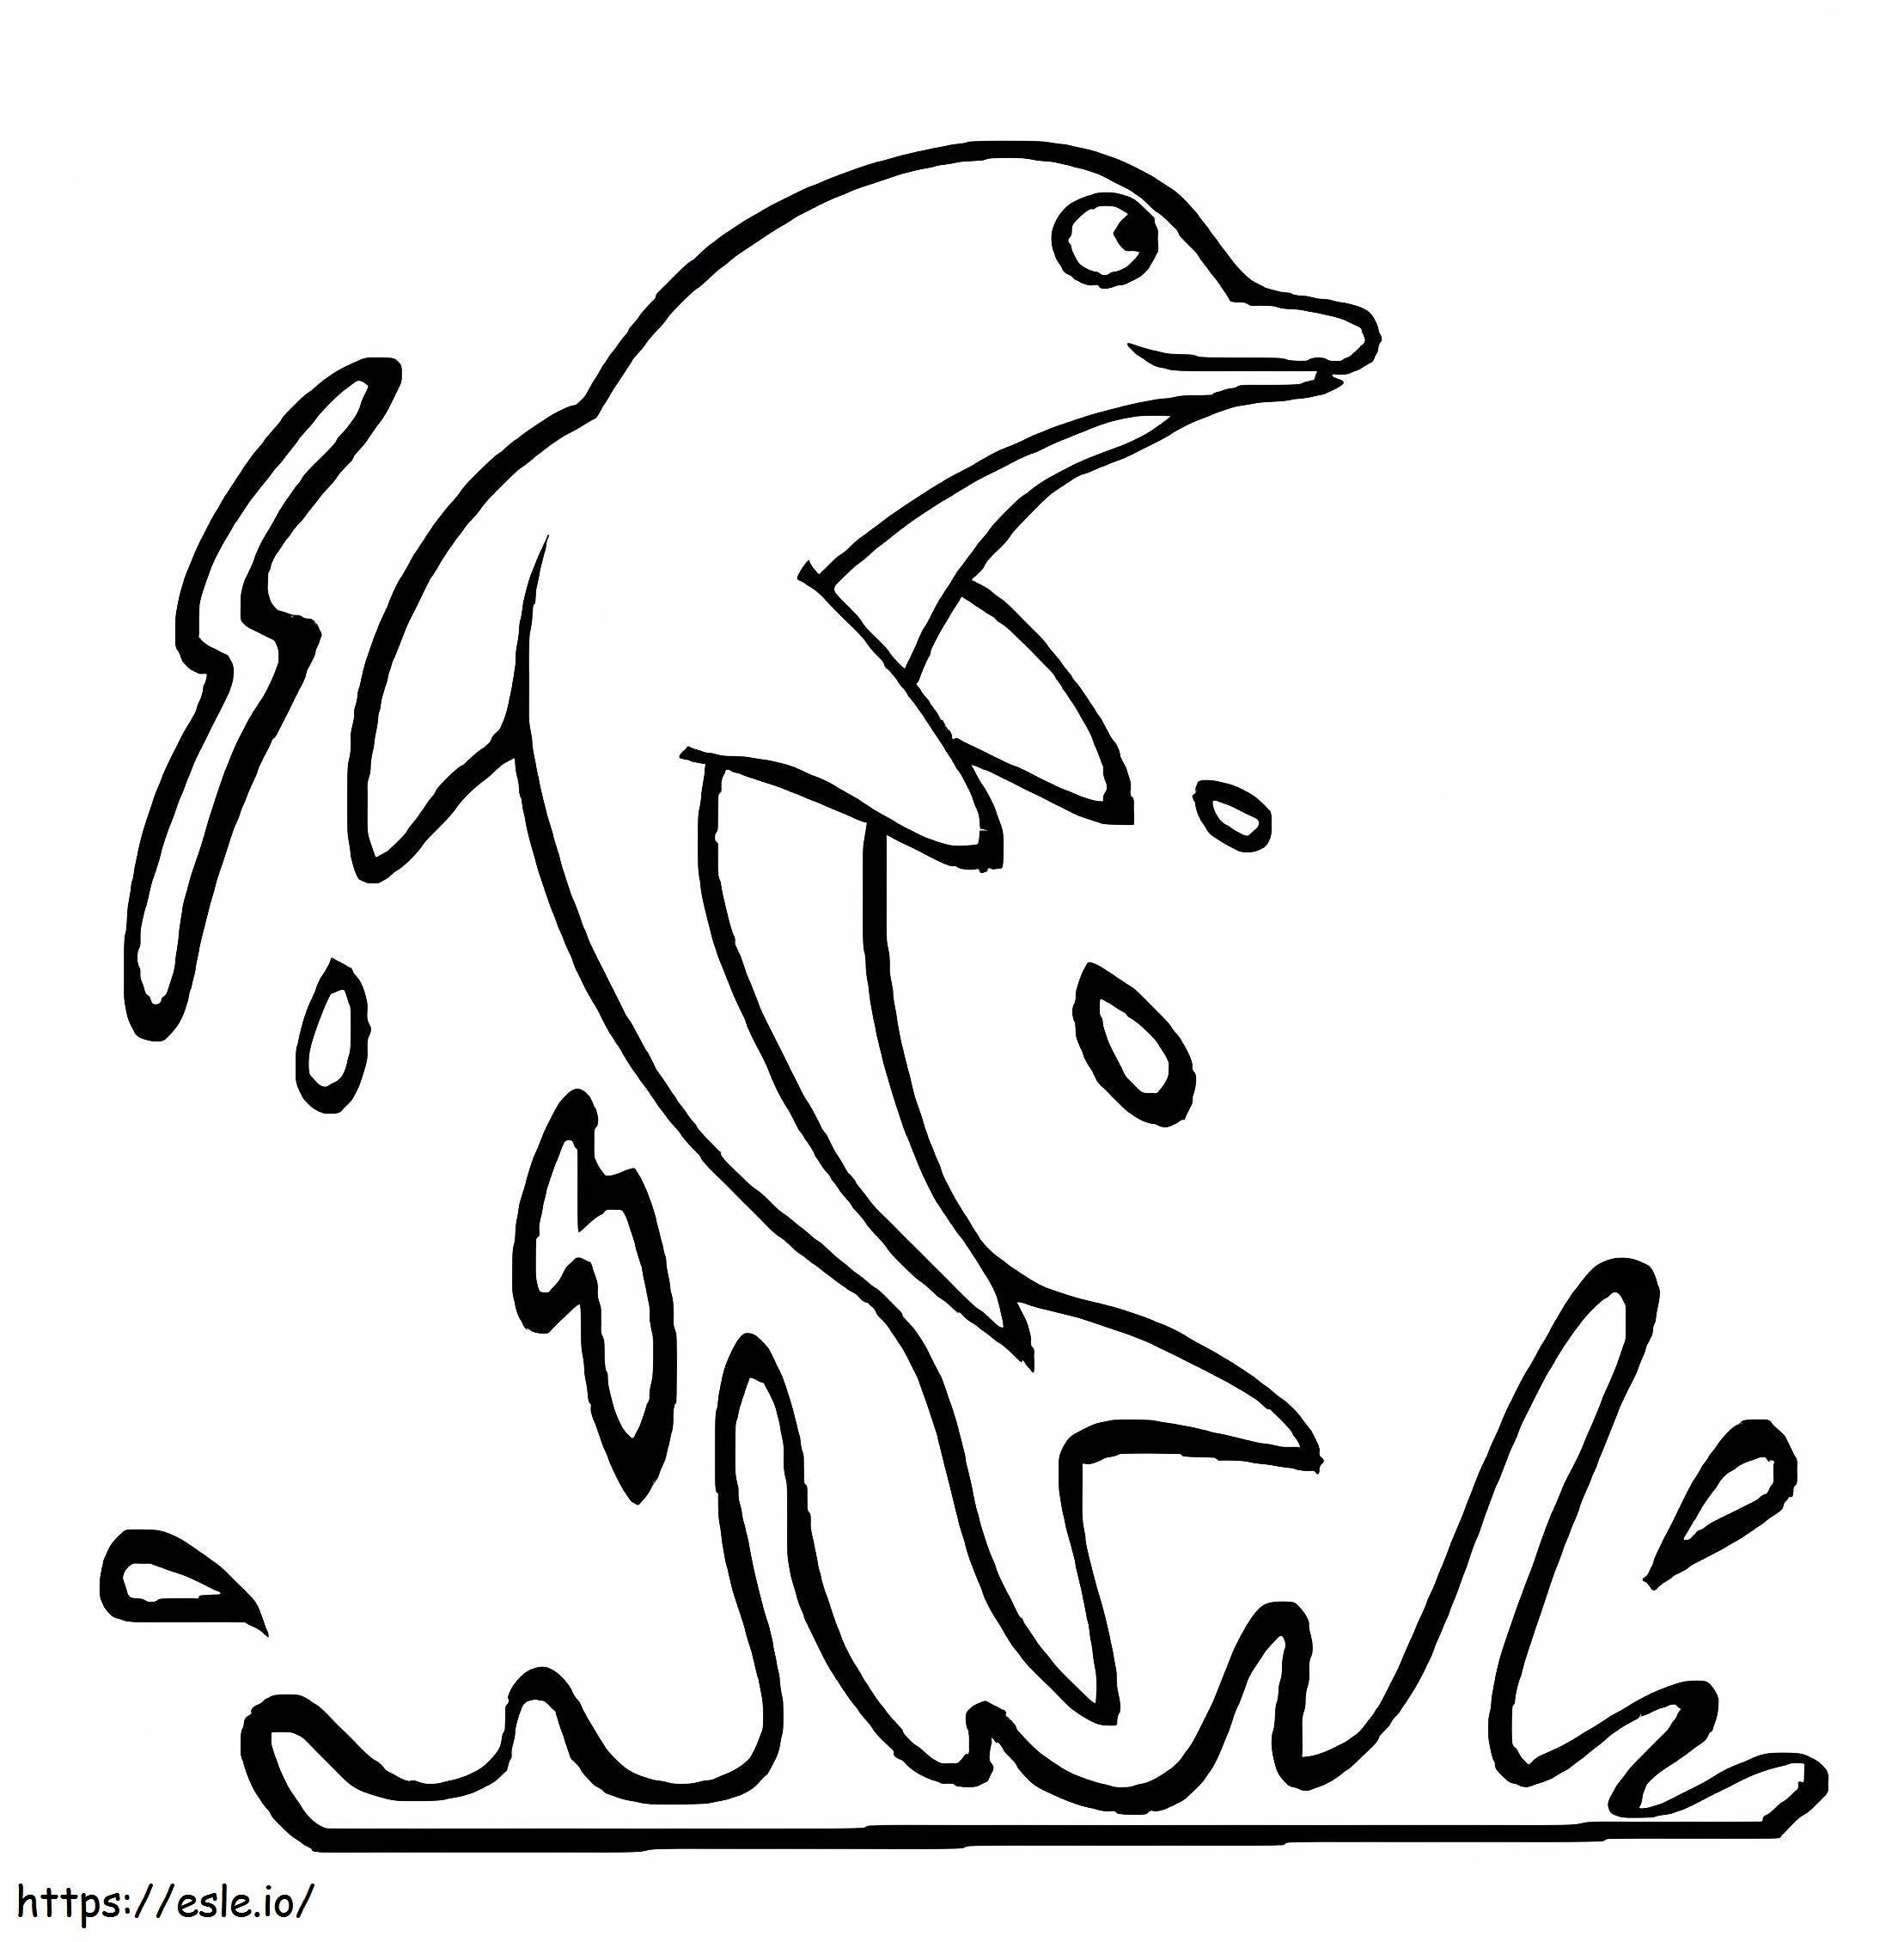 Peruspiirros delfiinihyppy värityskuva